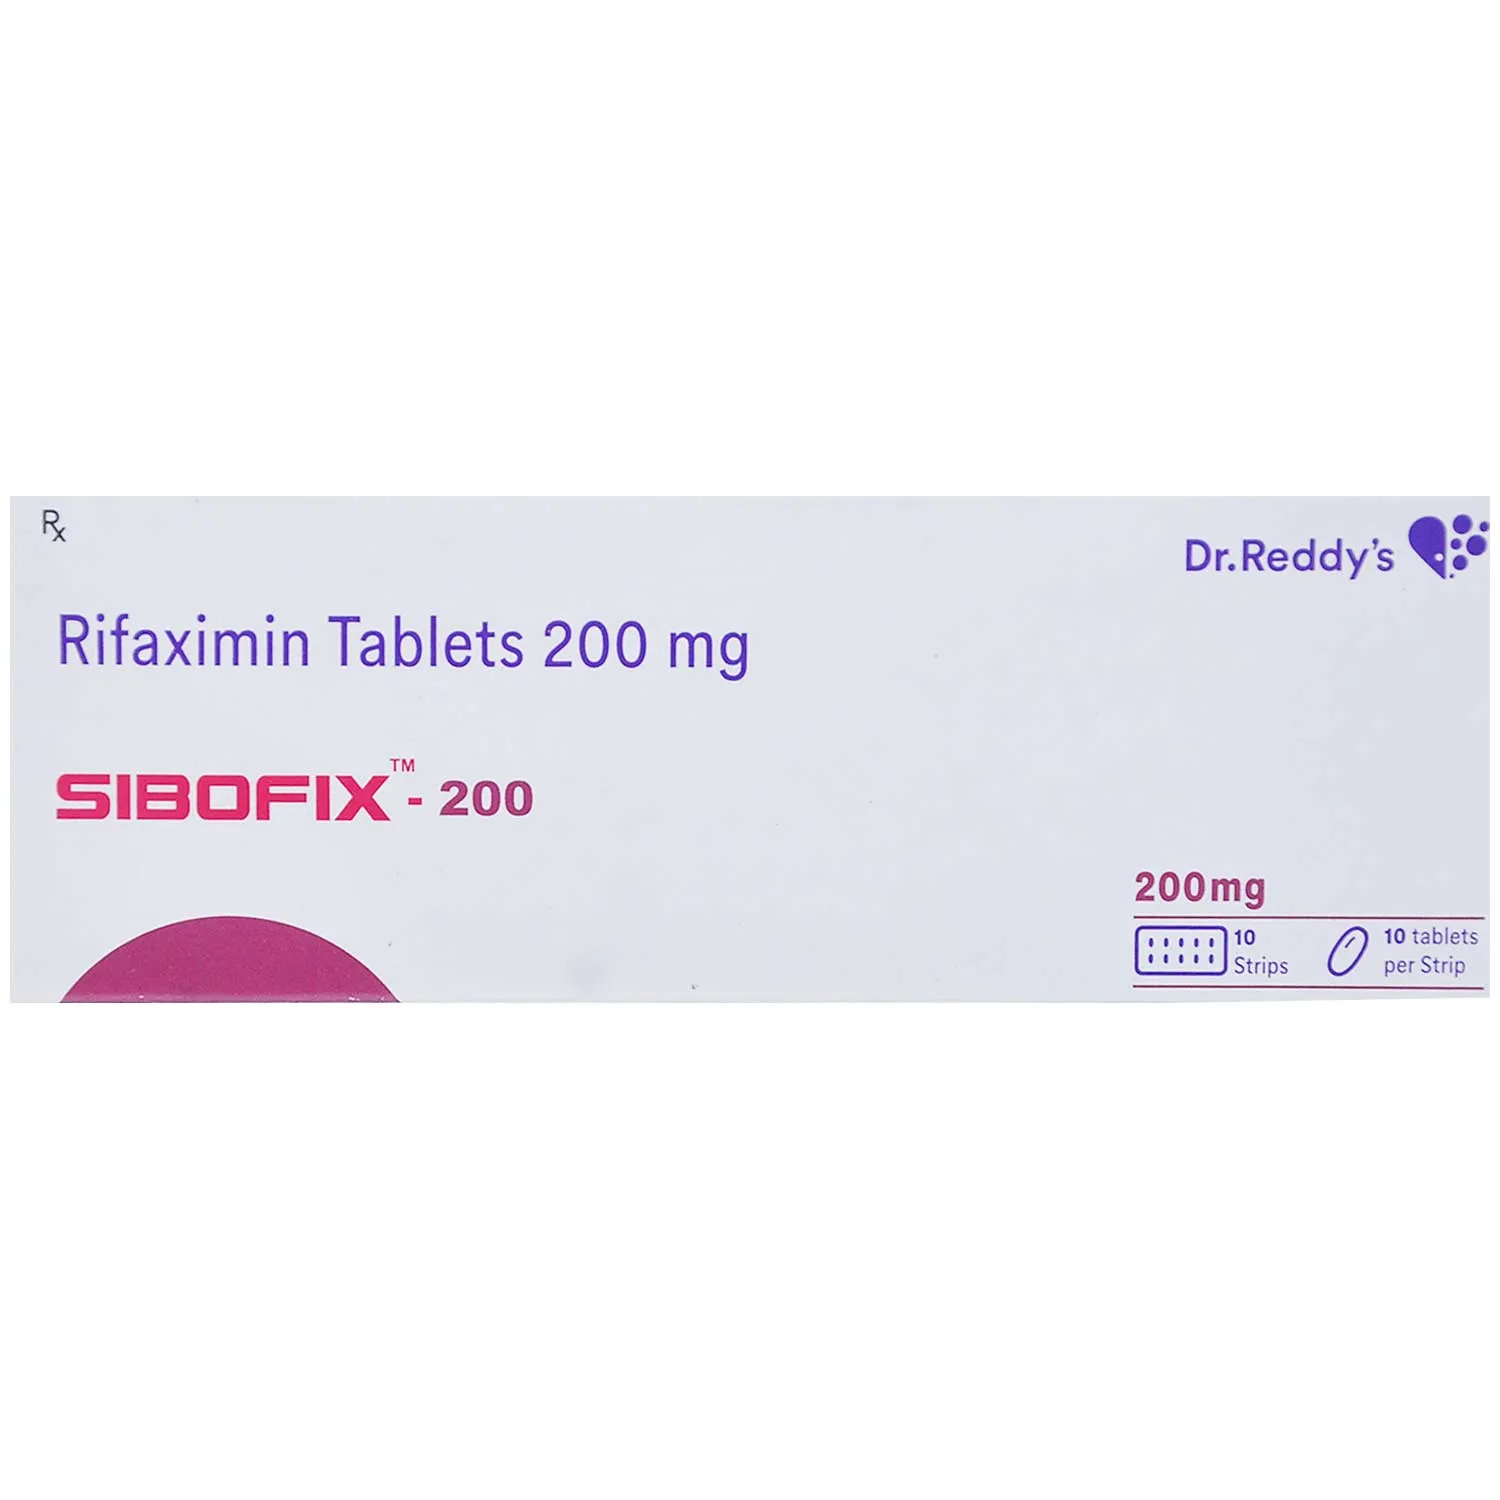 Sibofix 200 Tablet